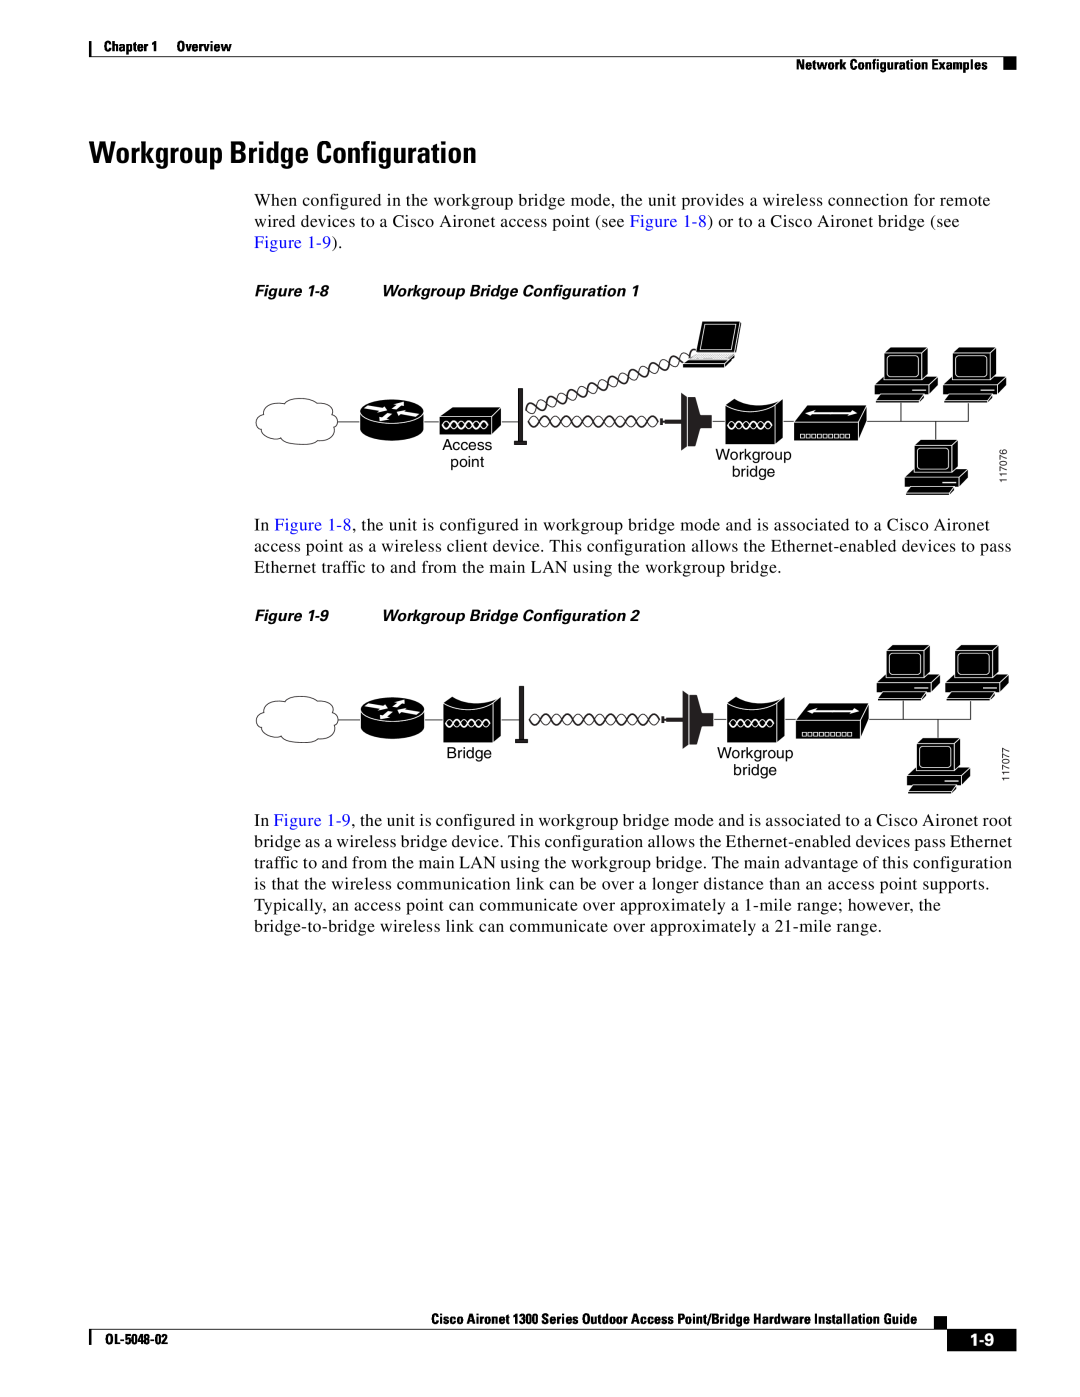 Cisco Systems 1300 Series manual 8 Workgroup Bridge Configuration, 9 Workgroup Bridge Configuration 